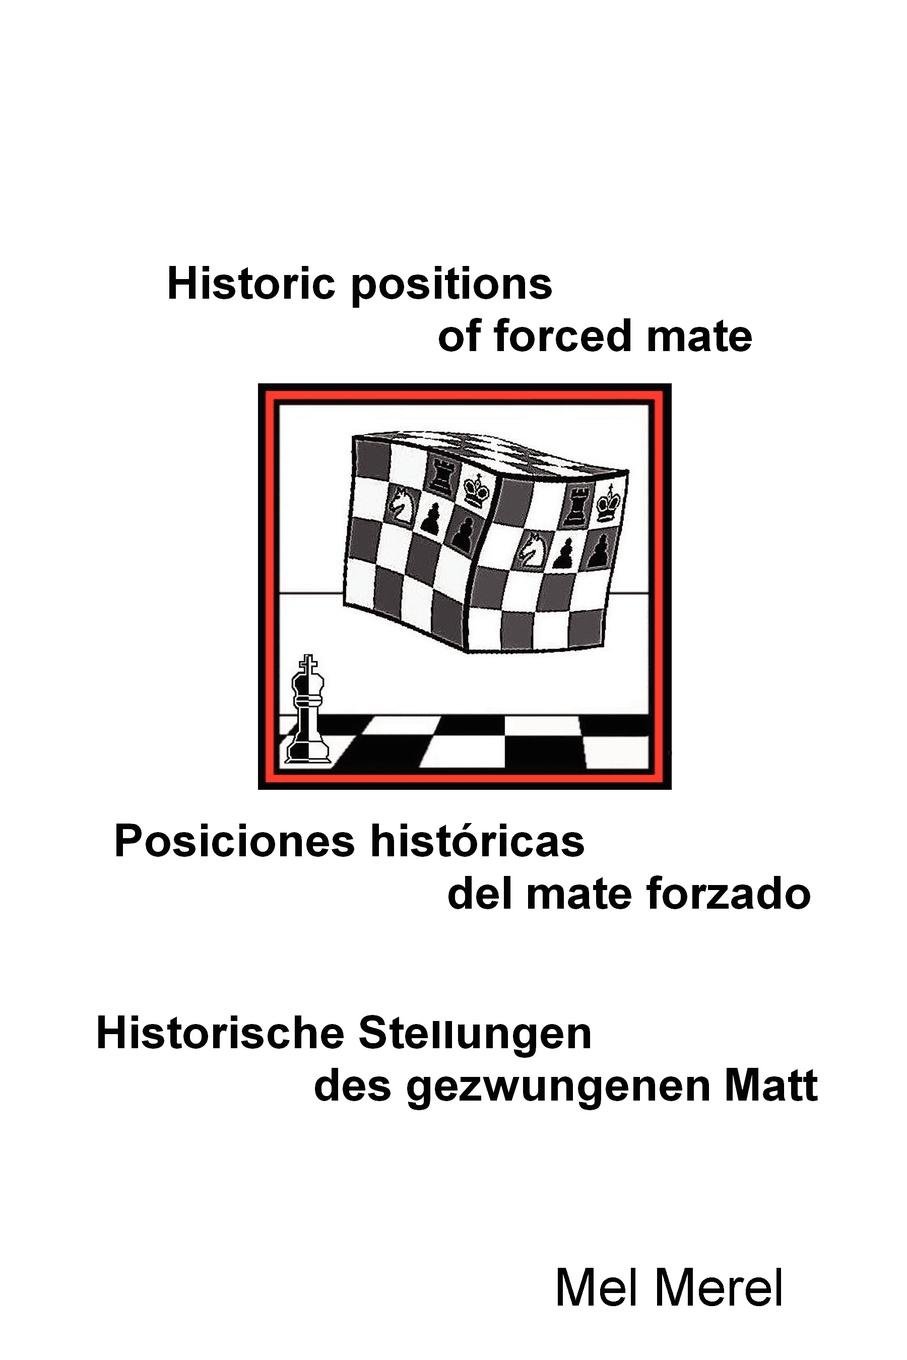 Historic positions of forced mate / Posiciones historicas del mate forzado / Historische Stellungen des gezwungenen Matt